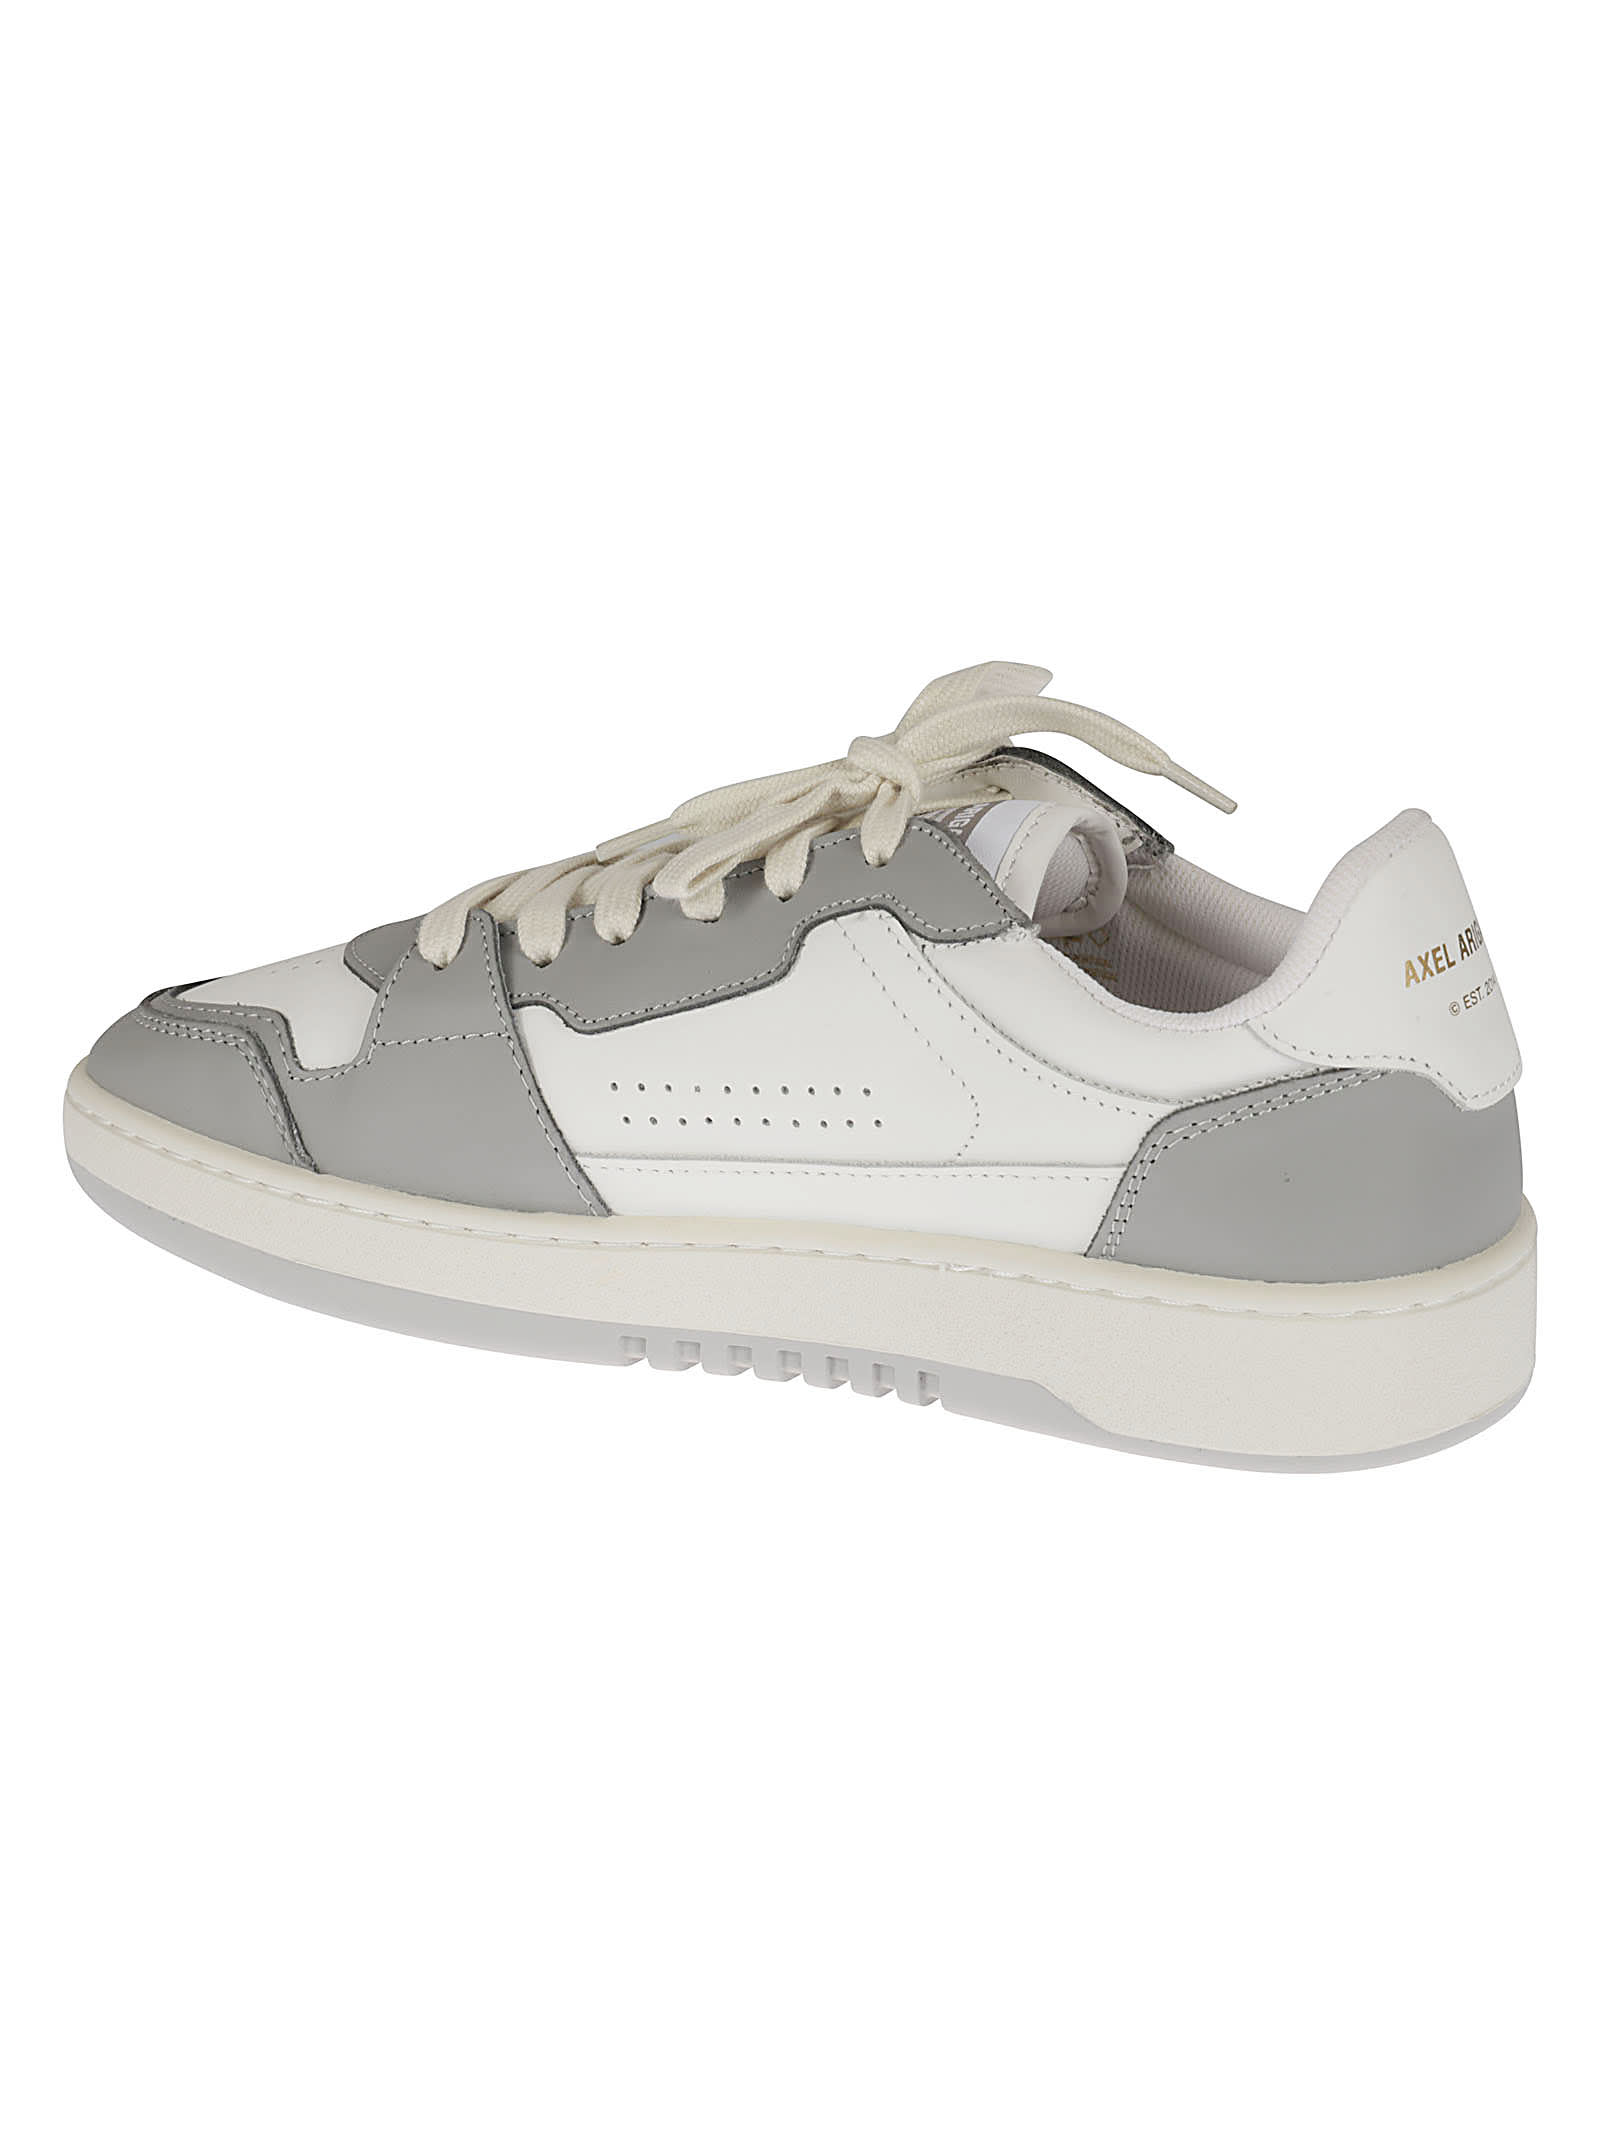 Shop Axel Arigato Dice Lo Sneakers In White/grey